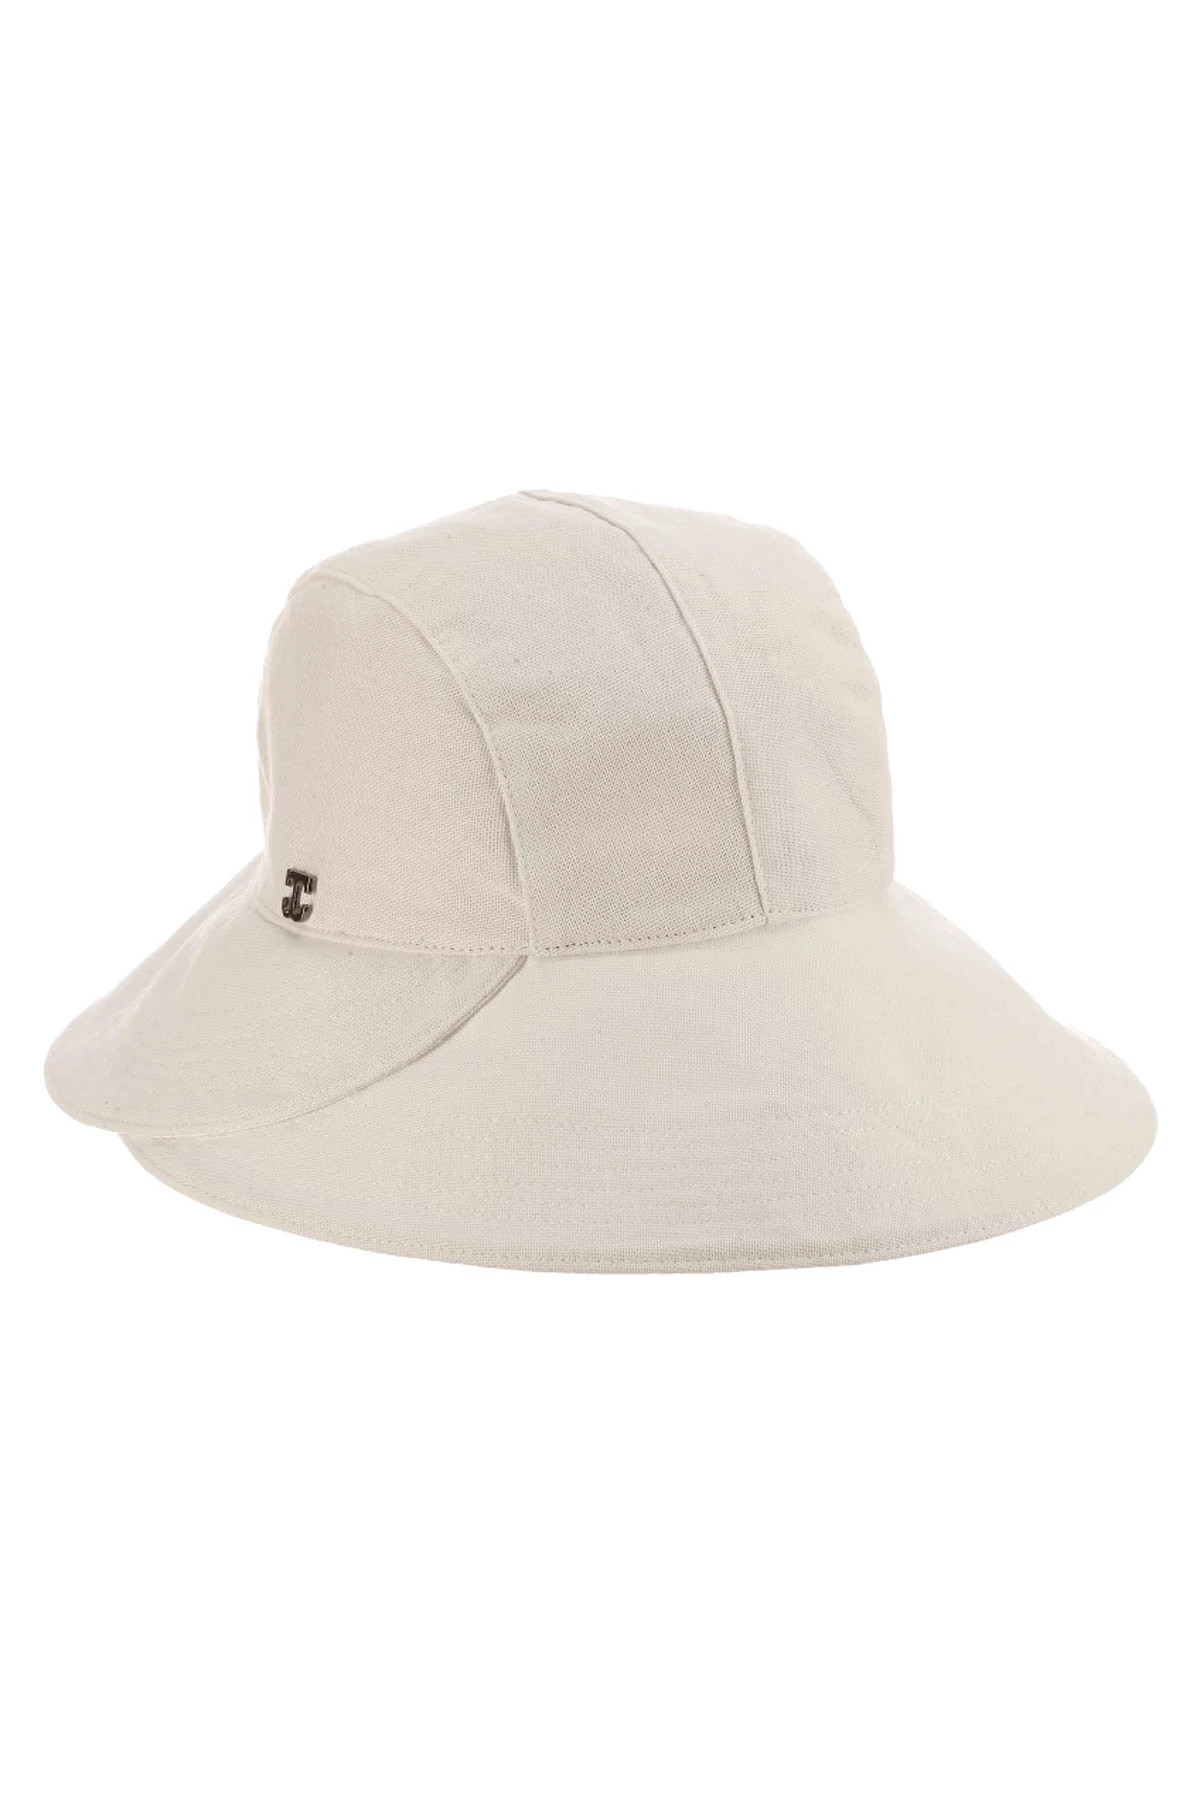 WHITE White Cotton Split Brim Sun Hat image number 1